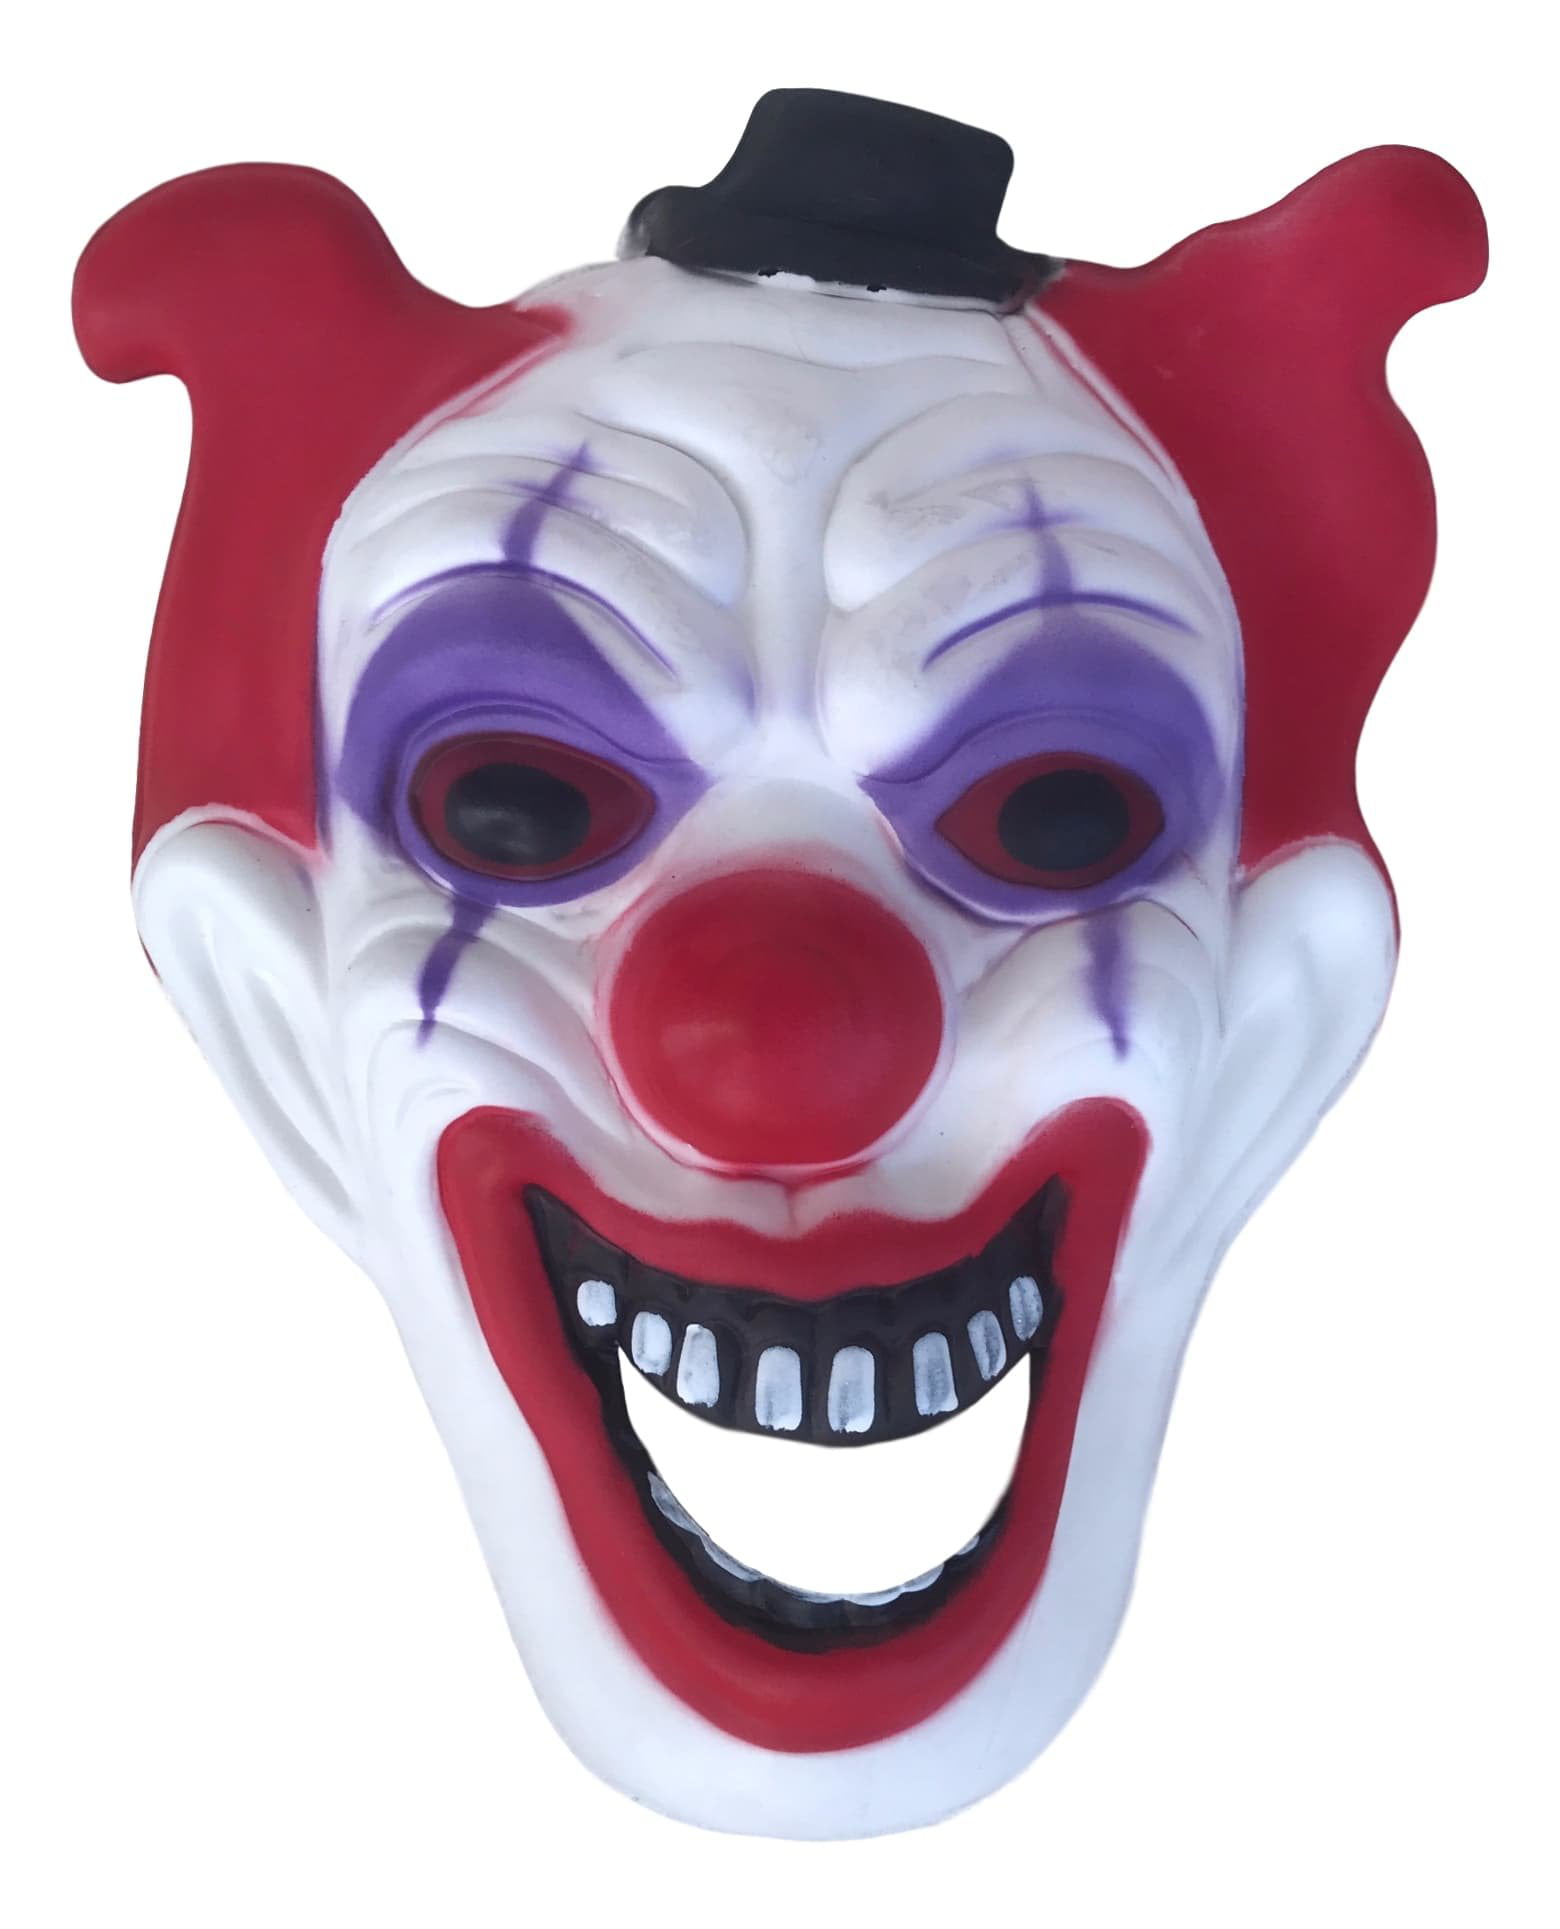 Jumbo Halloween Scary Crazy Clown Mask- Red and Black - Walmart.com ...